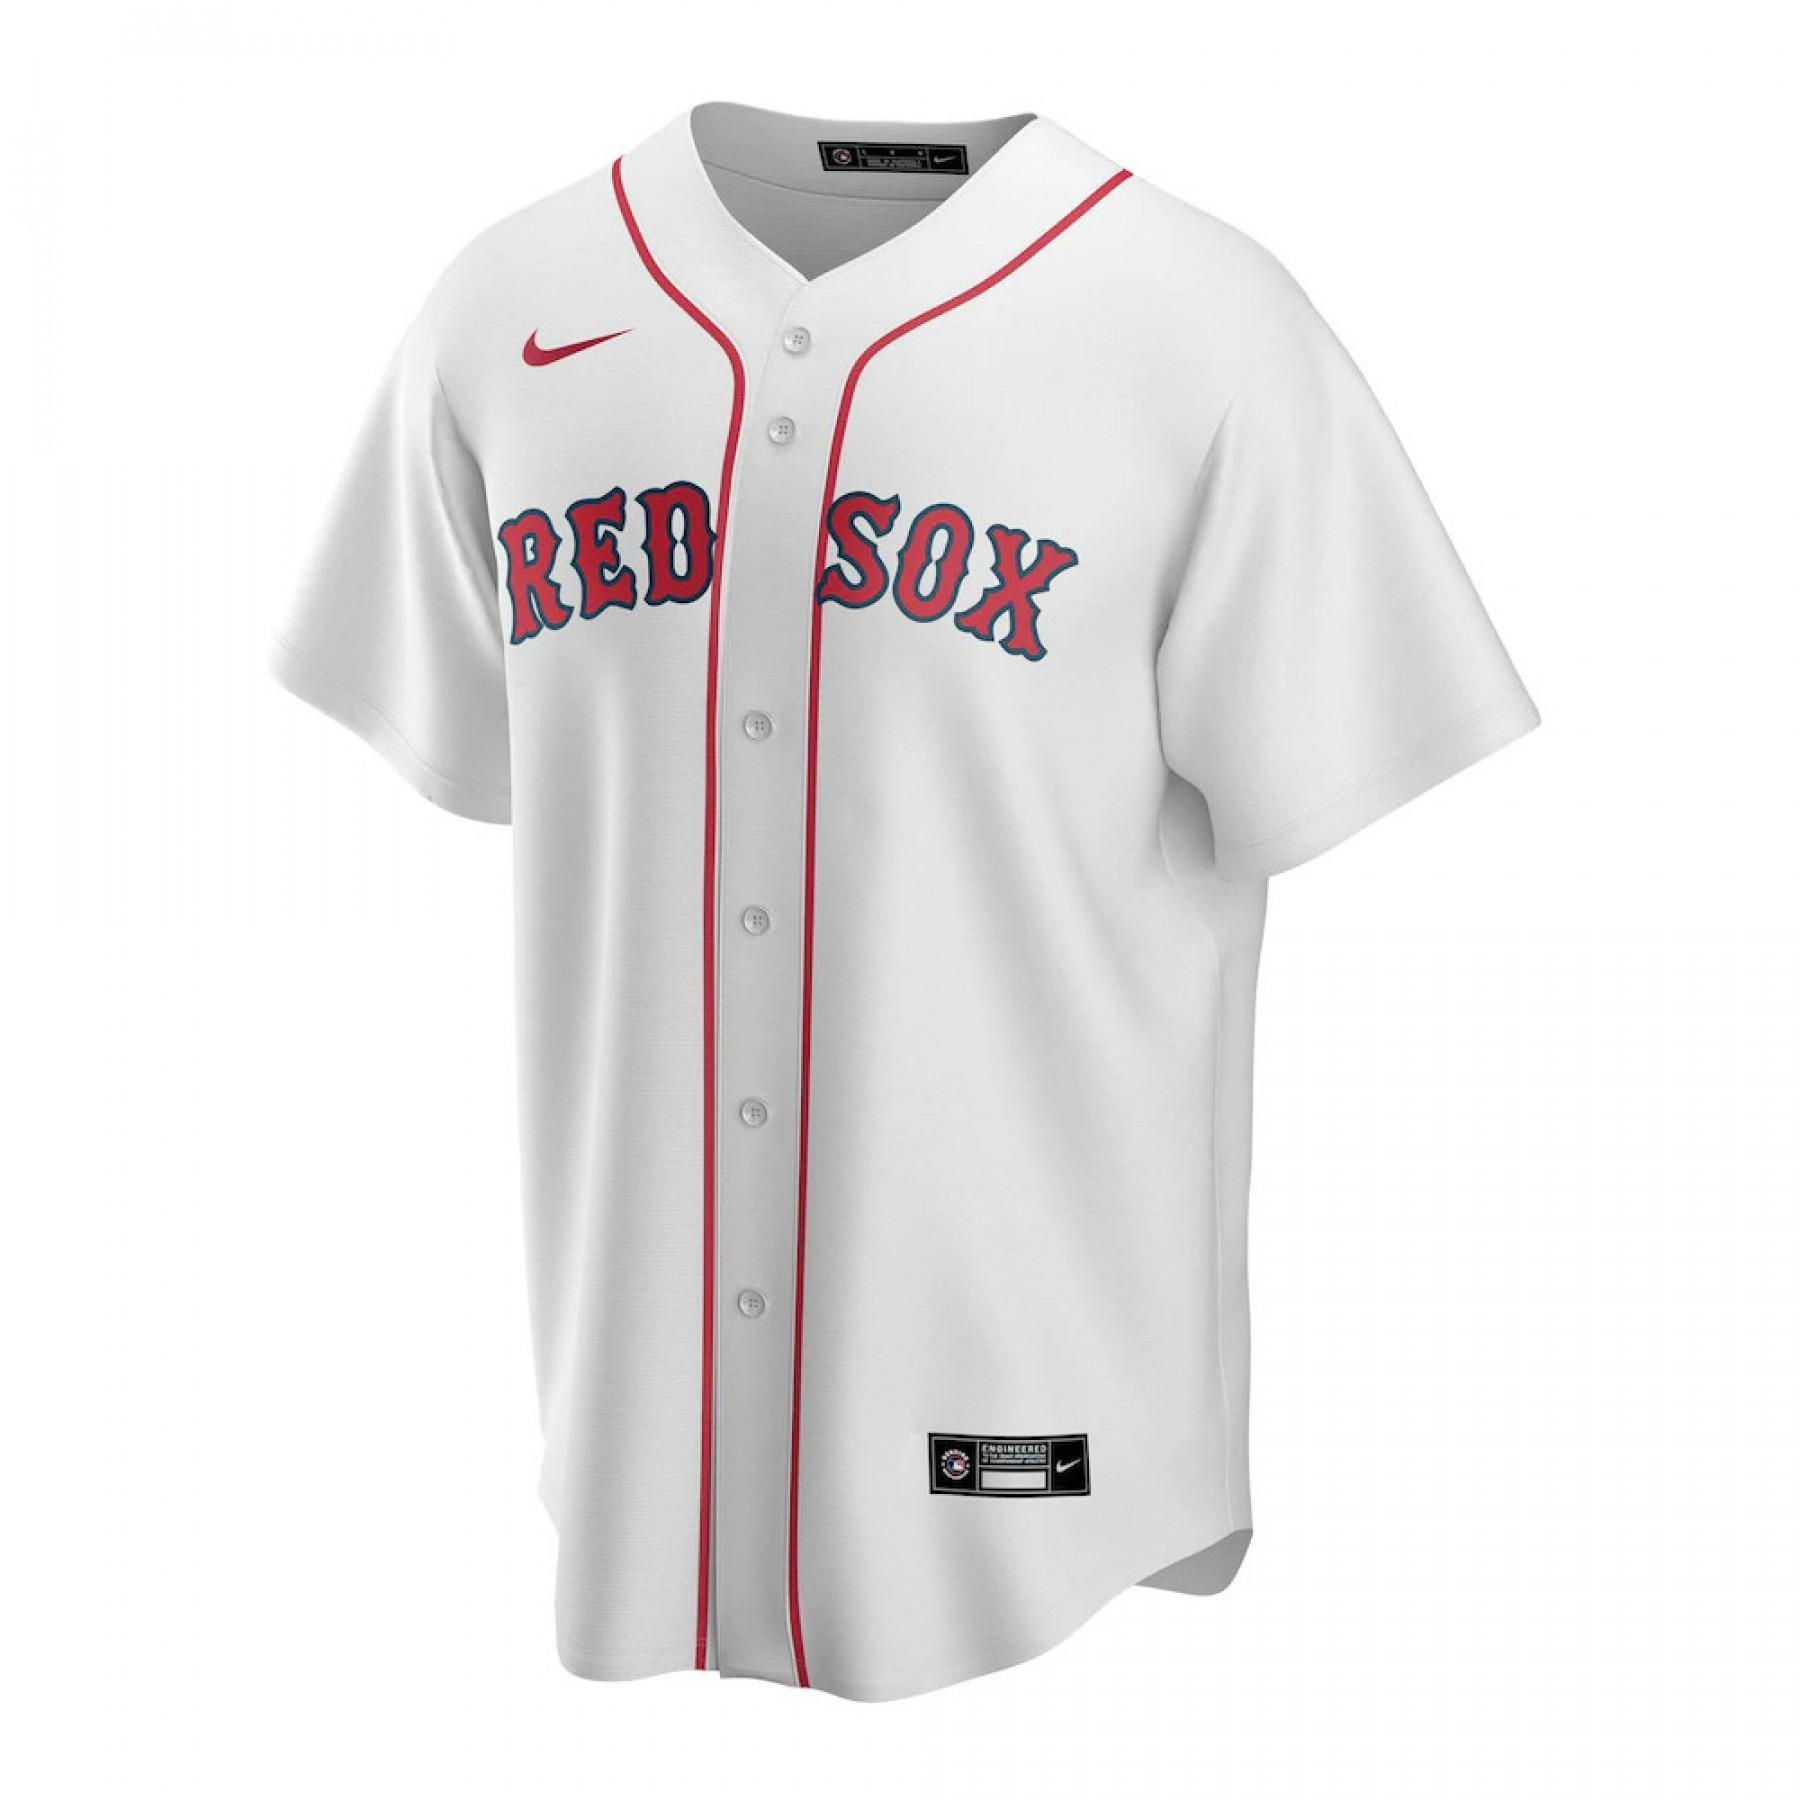 Officieel replicatruitje Boston Red Sox